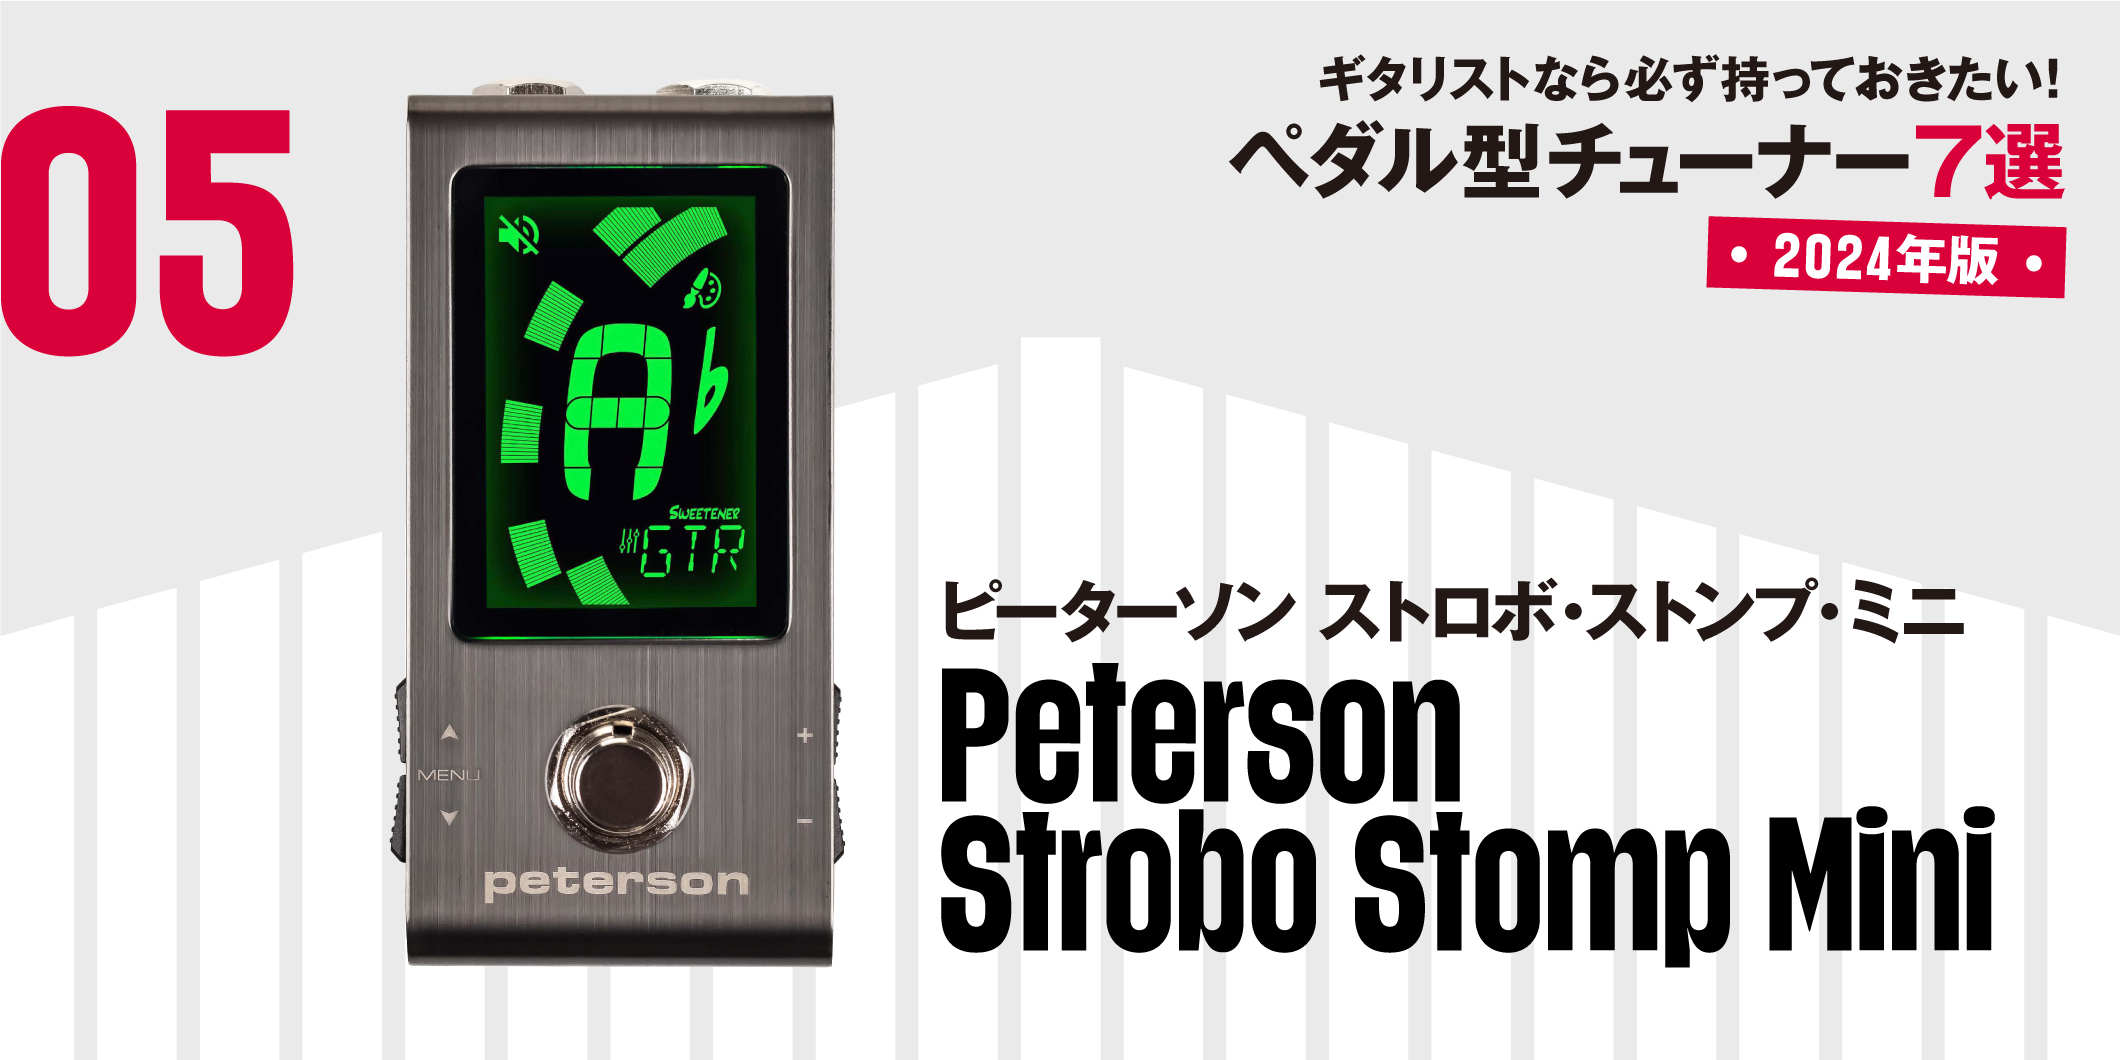 Peterson／Strobo Stomp Mini〜ギタリストなら必ず持っておきたい最新 